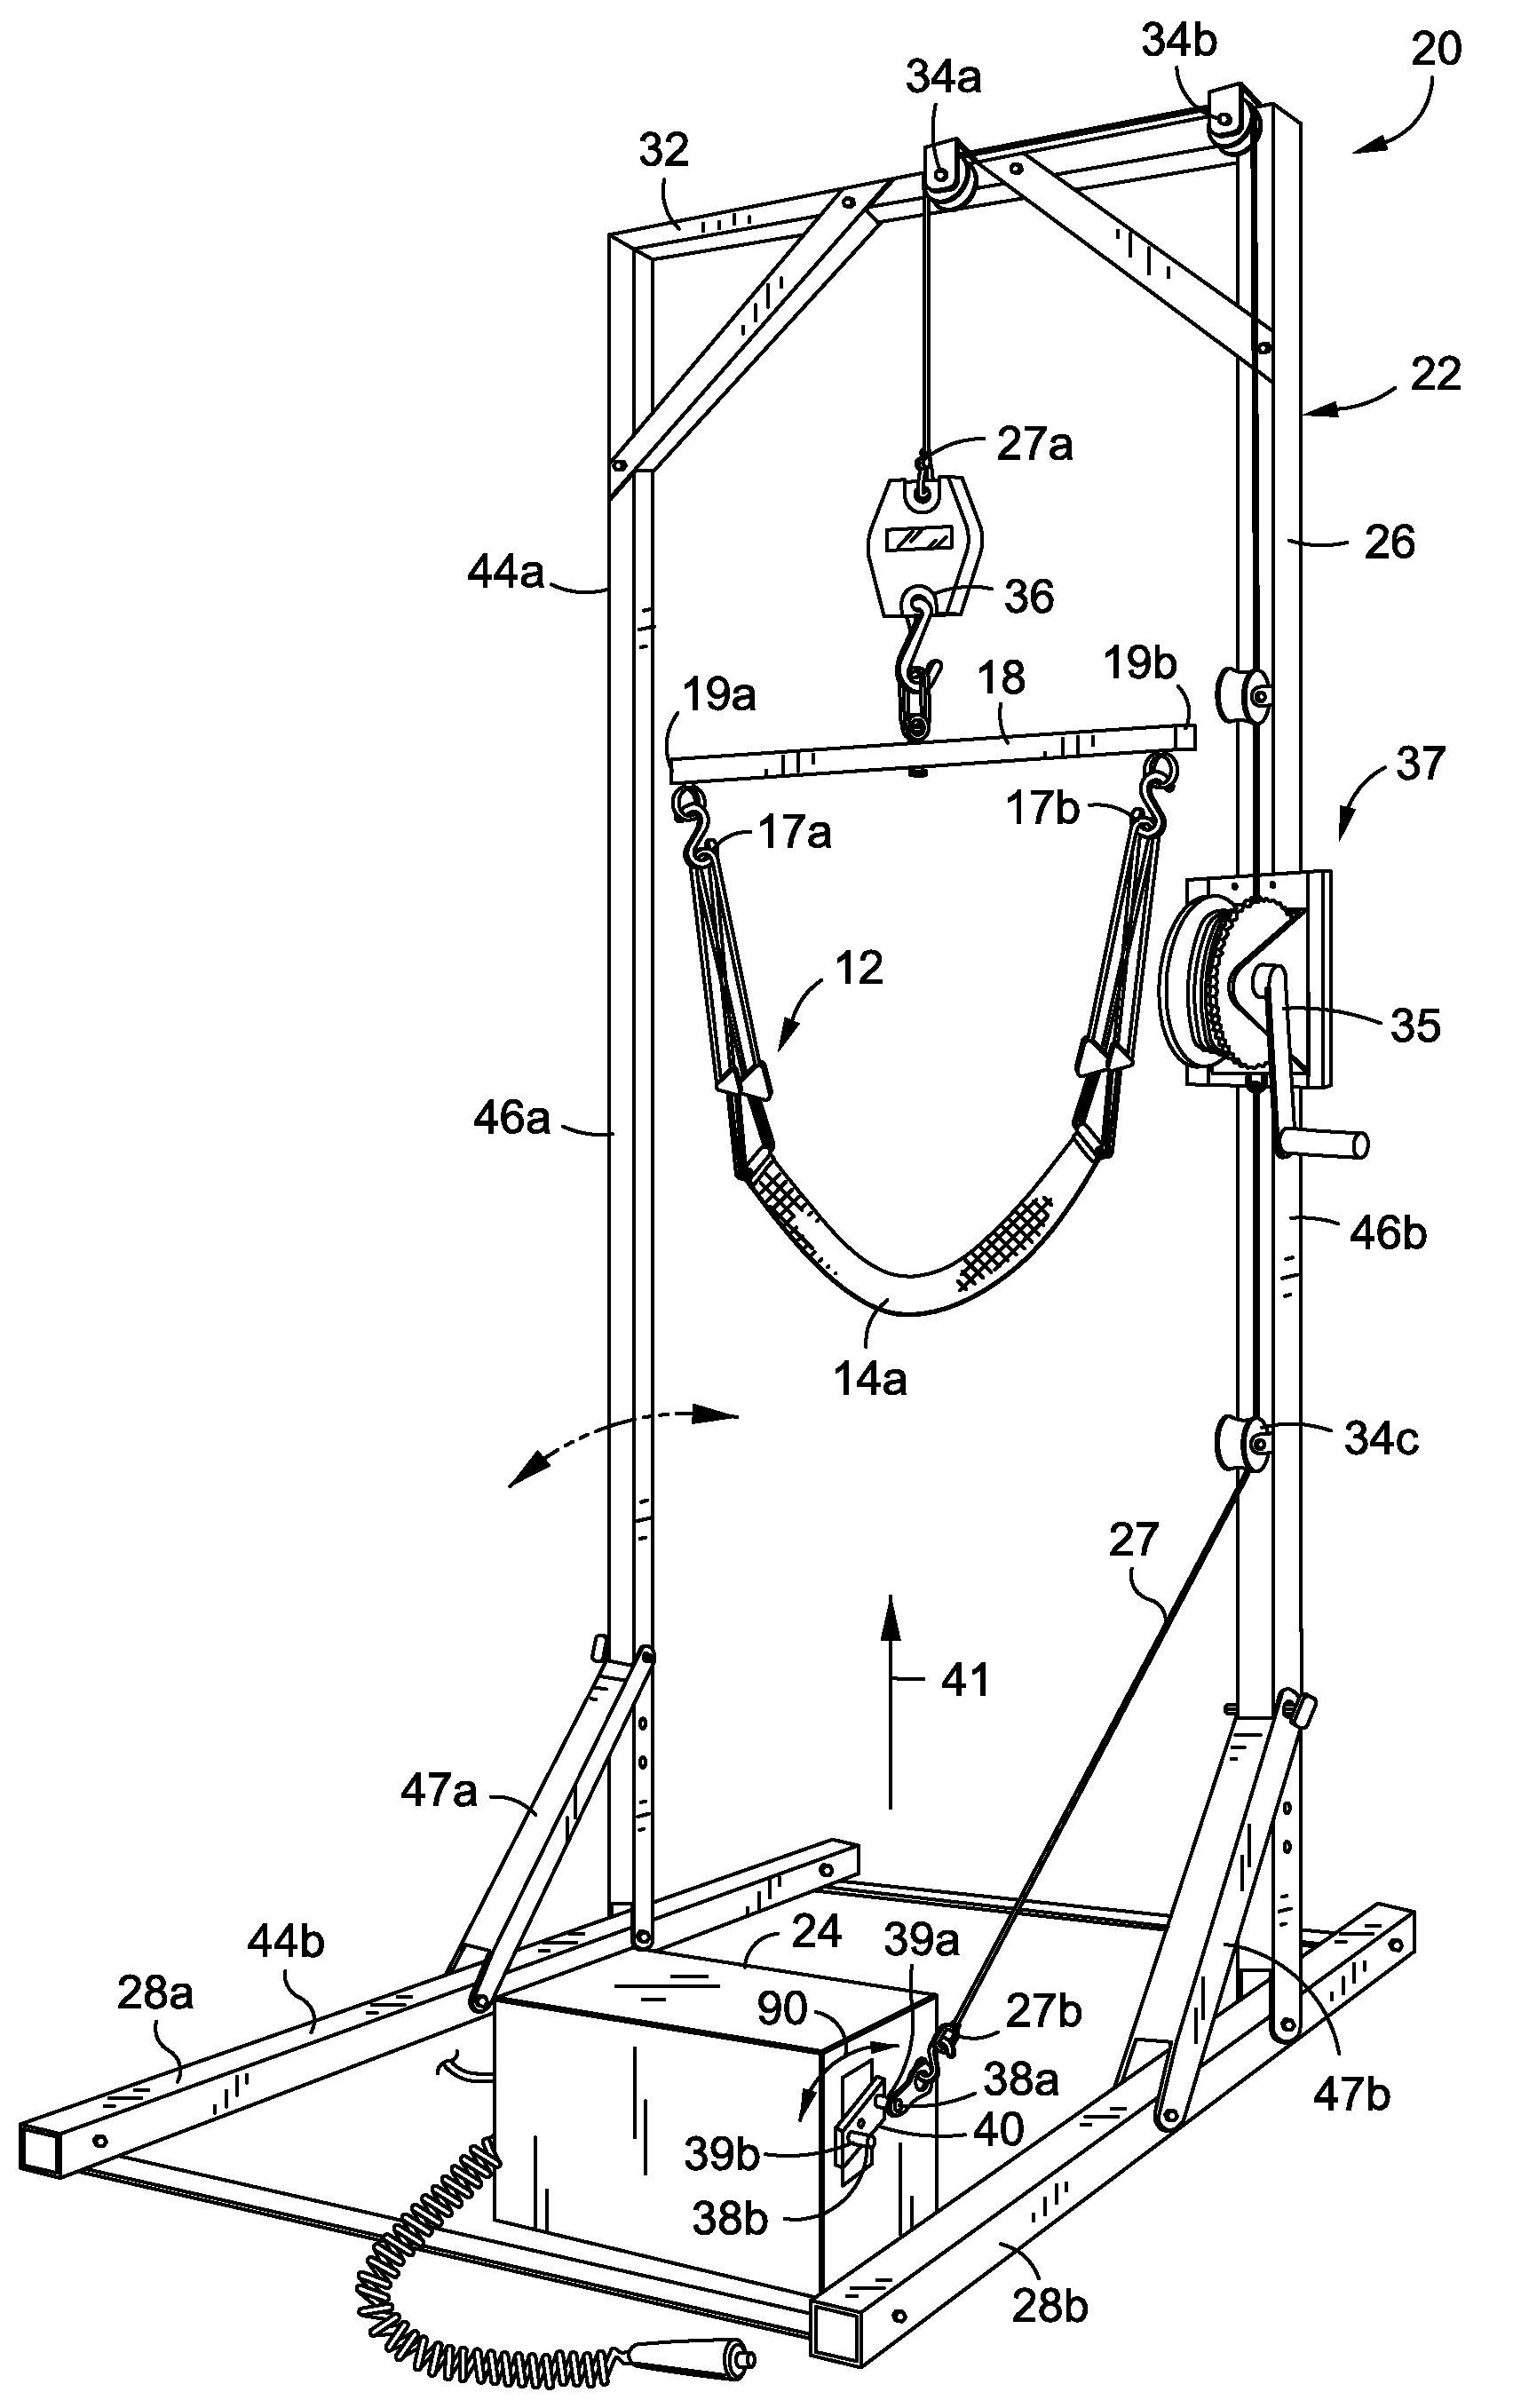 Intermittent lumbar traction apparatus and method